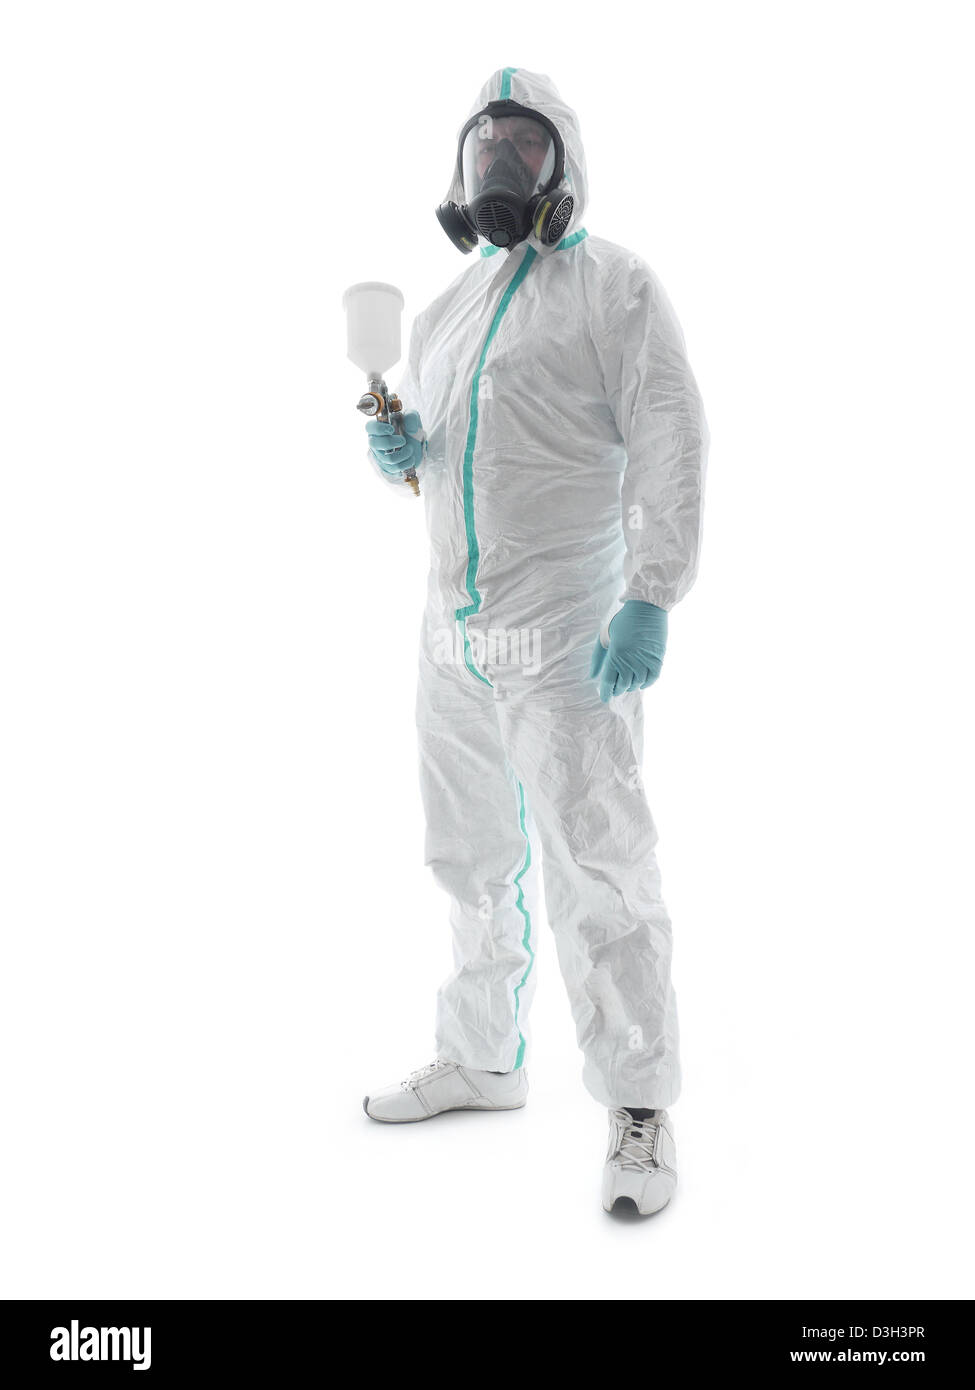 Spray painter wearing white coverall, respirator and spray gun shot over white background Stock Photo